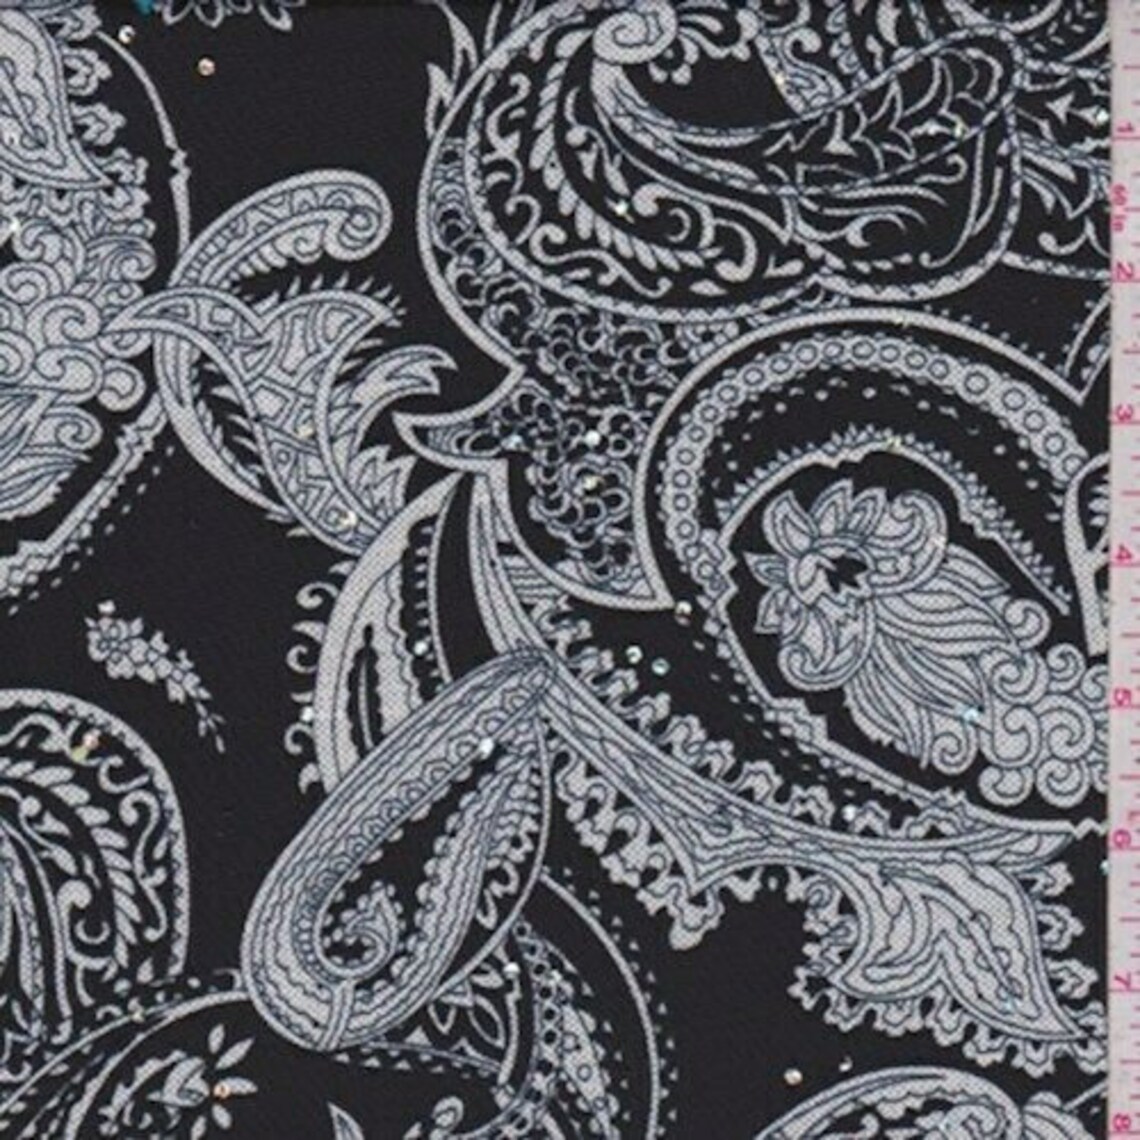 Black/white Paisley Nylon Knit Fabric by the Yard | Etsy